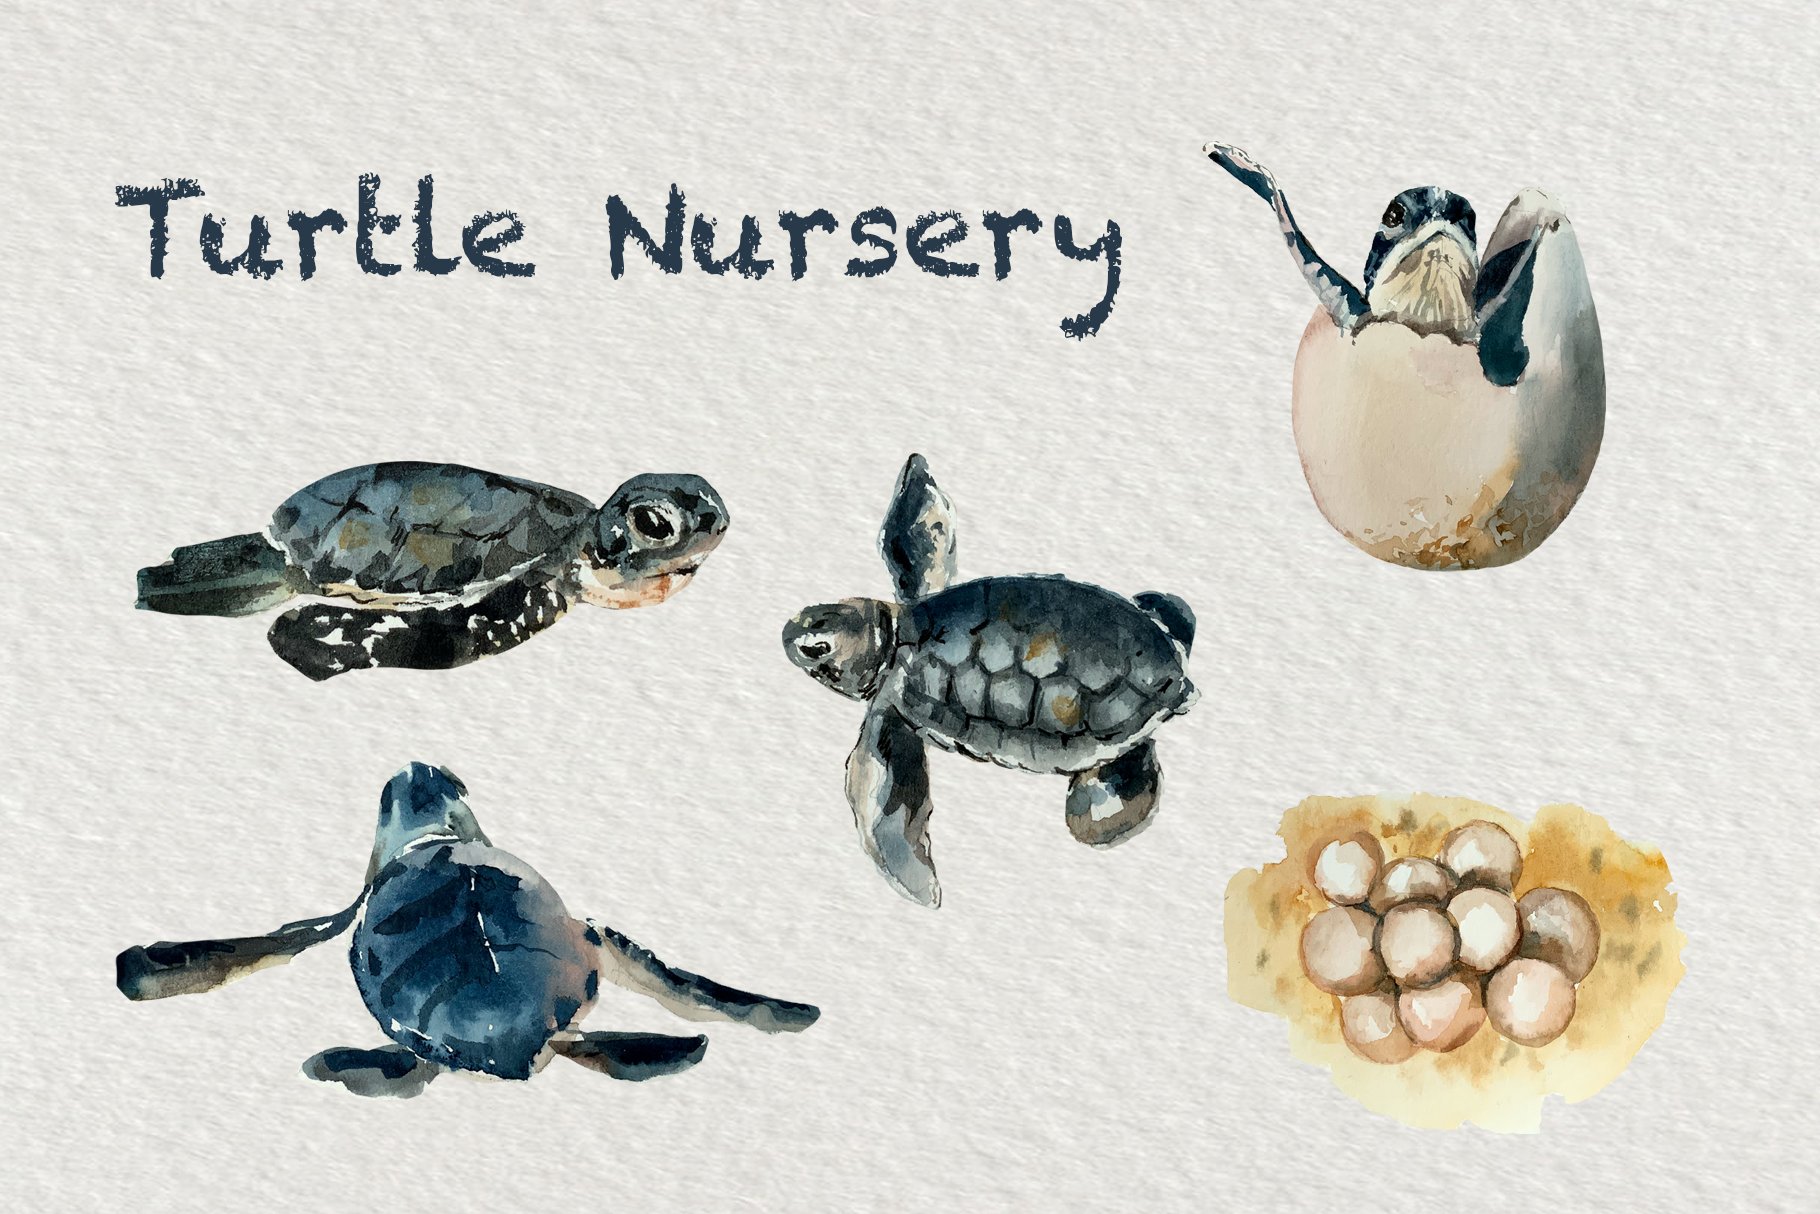 Sea Turtle Life Cycle Watercolor.